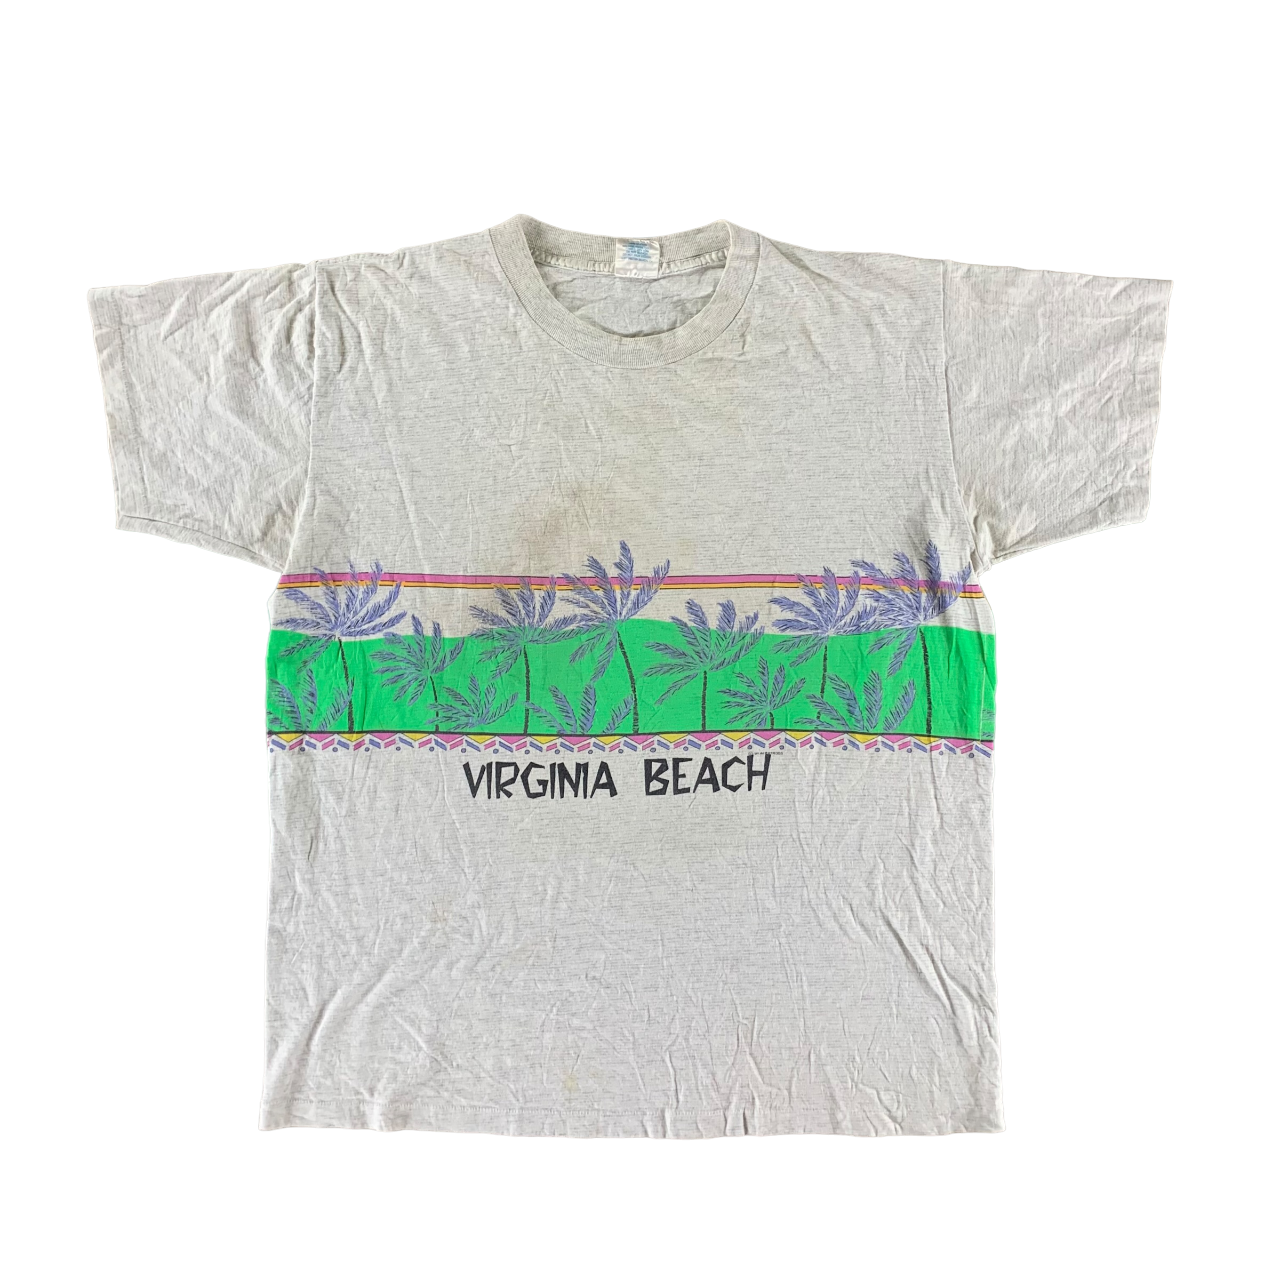 Vintage 1991 Virginia Beach T-shirt size XL